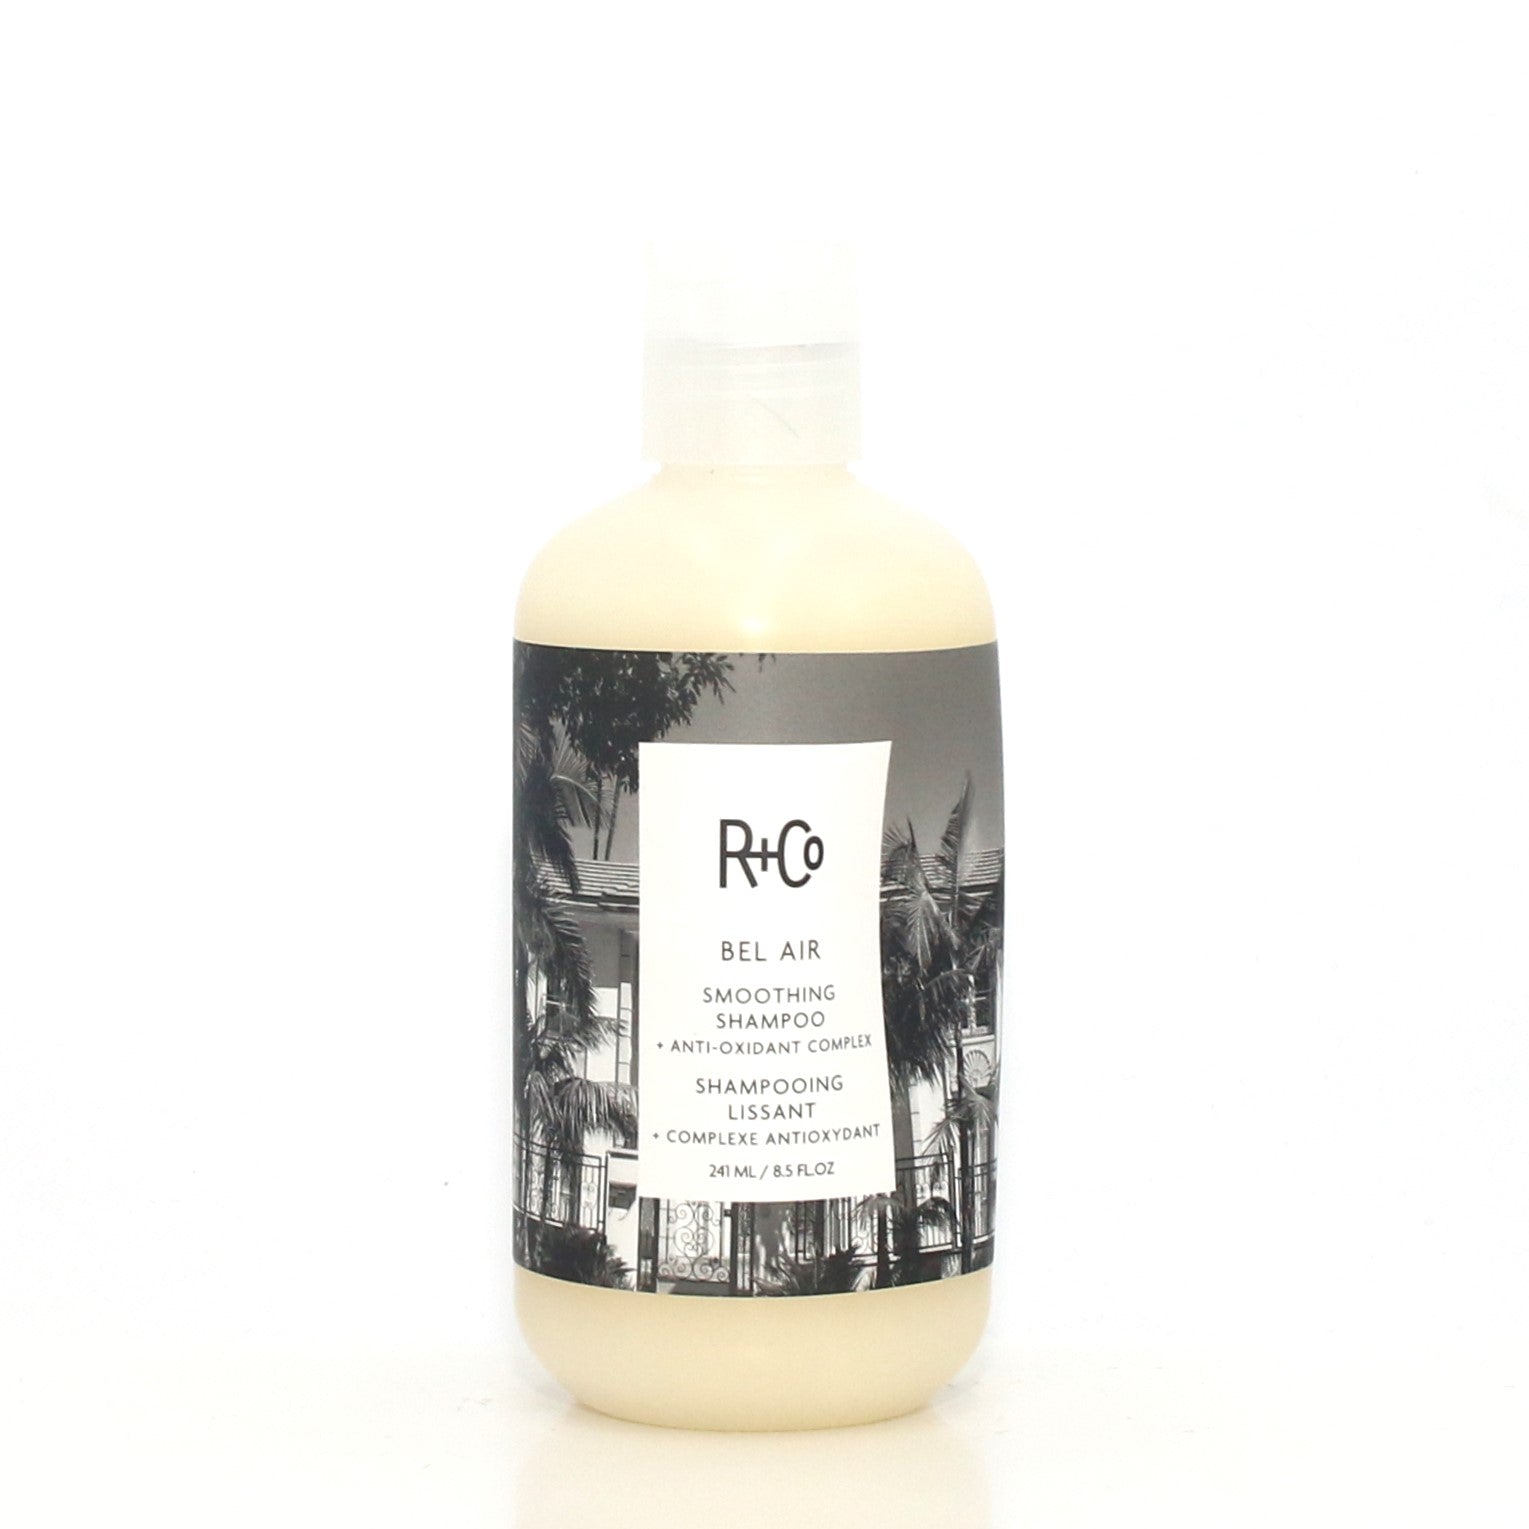 R+Co Bel Air Smoothing Shampoo 8.5 oz